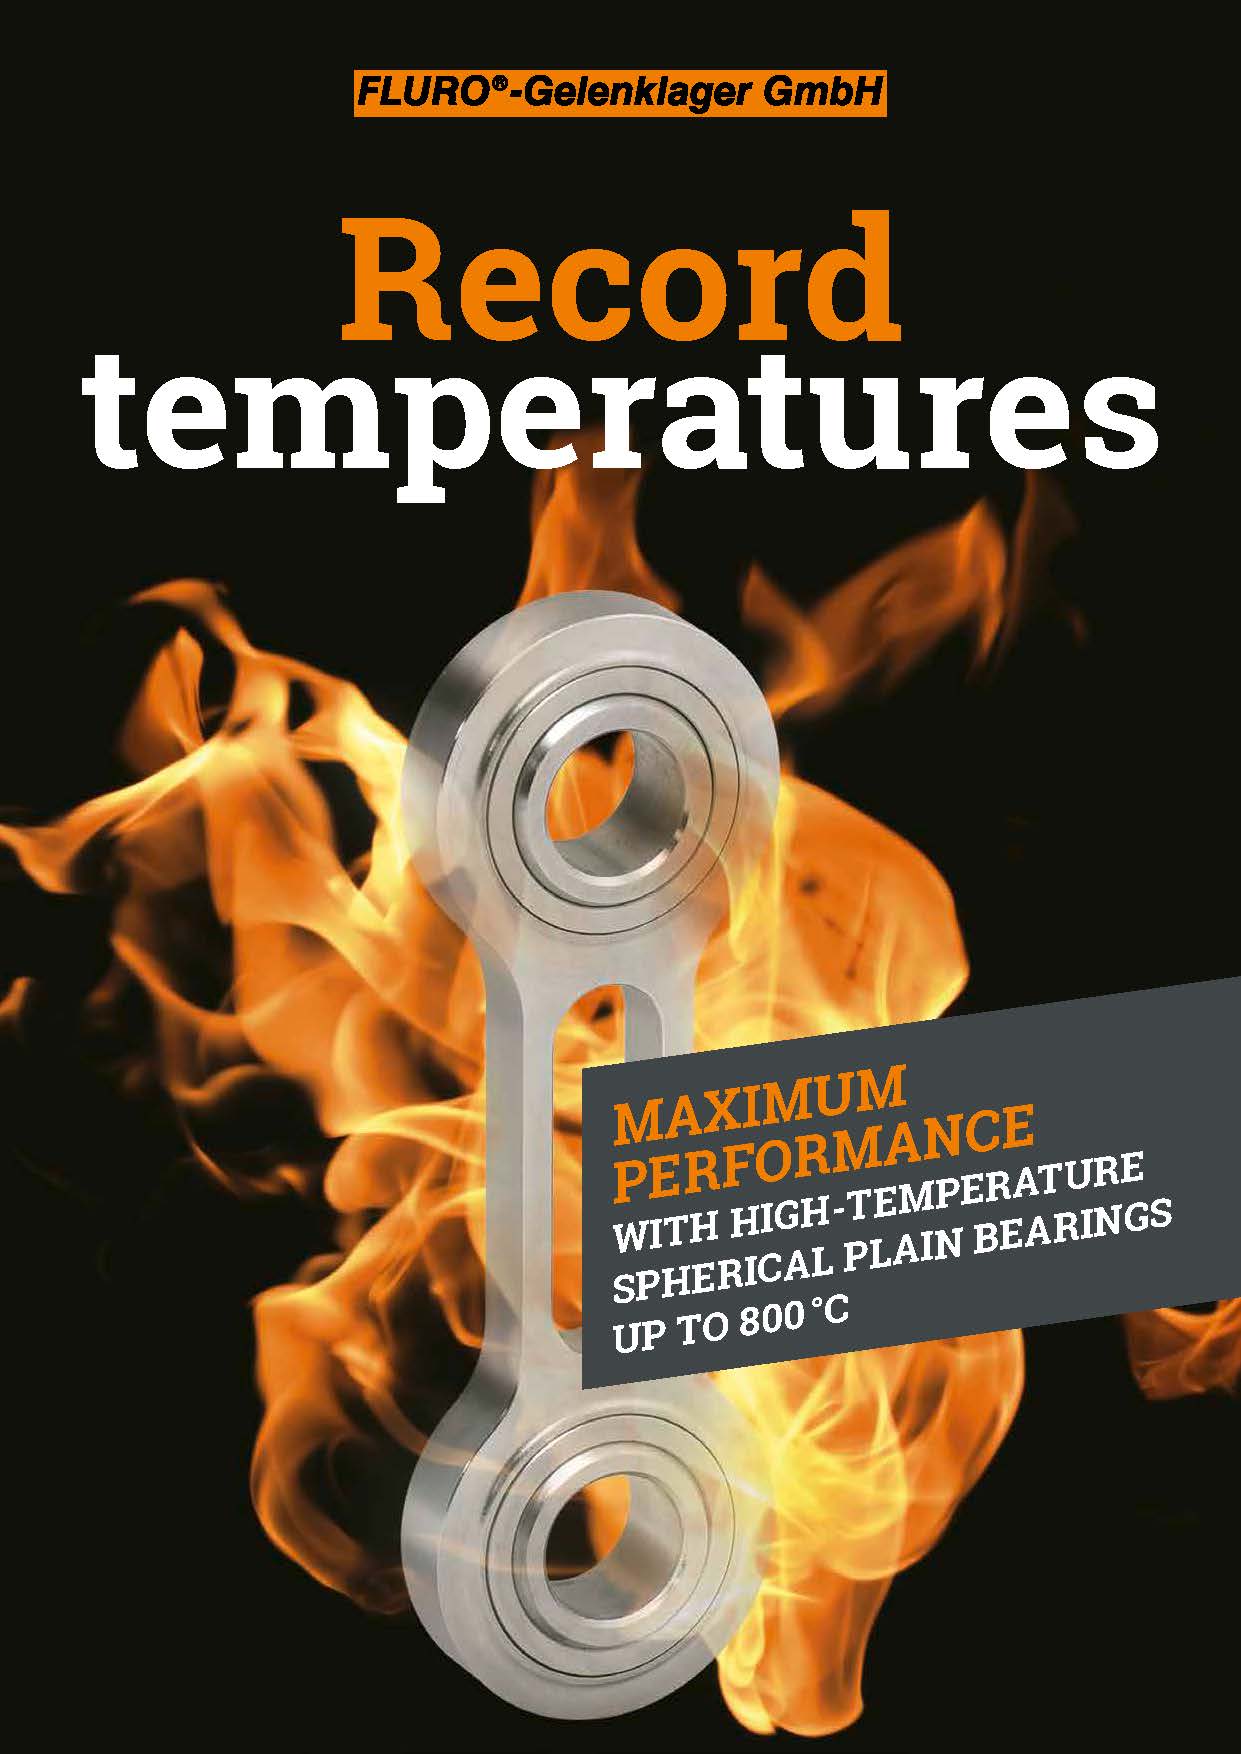 Record temperatures, high-temperature Spherical Plain Bearings, 800° C